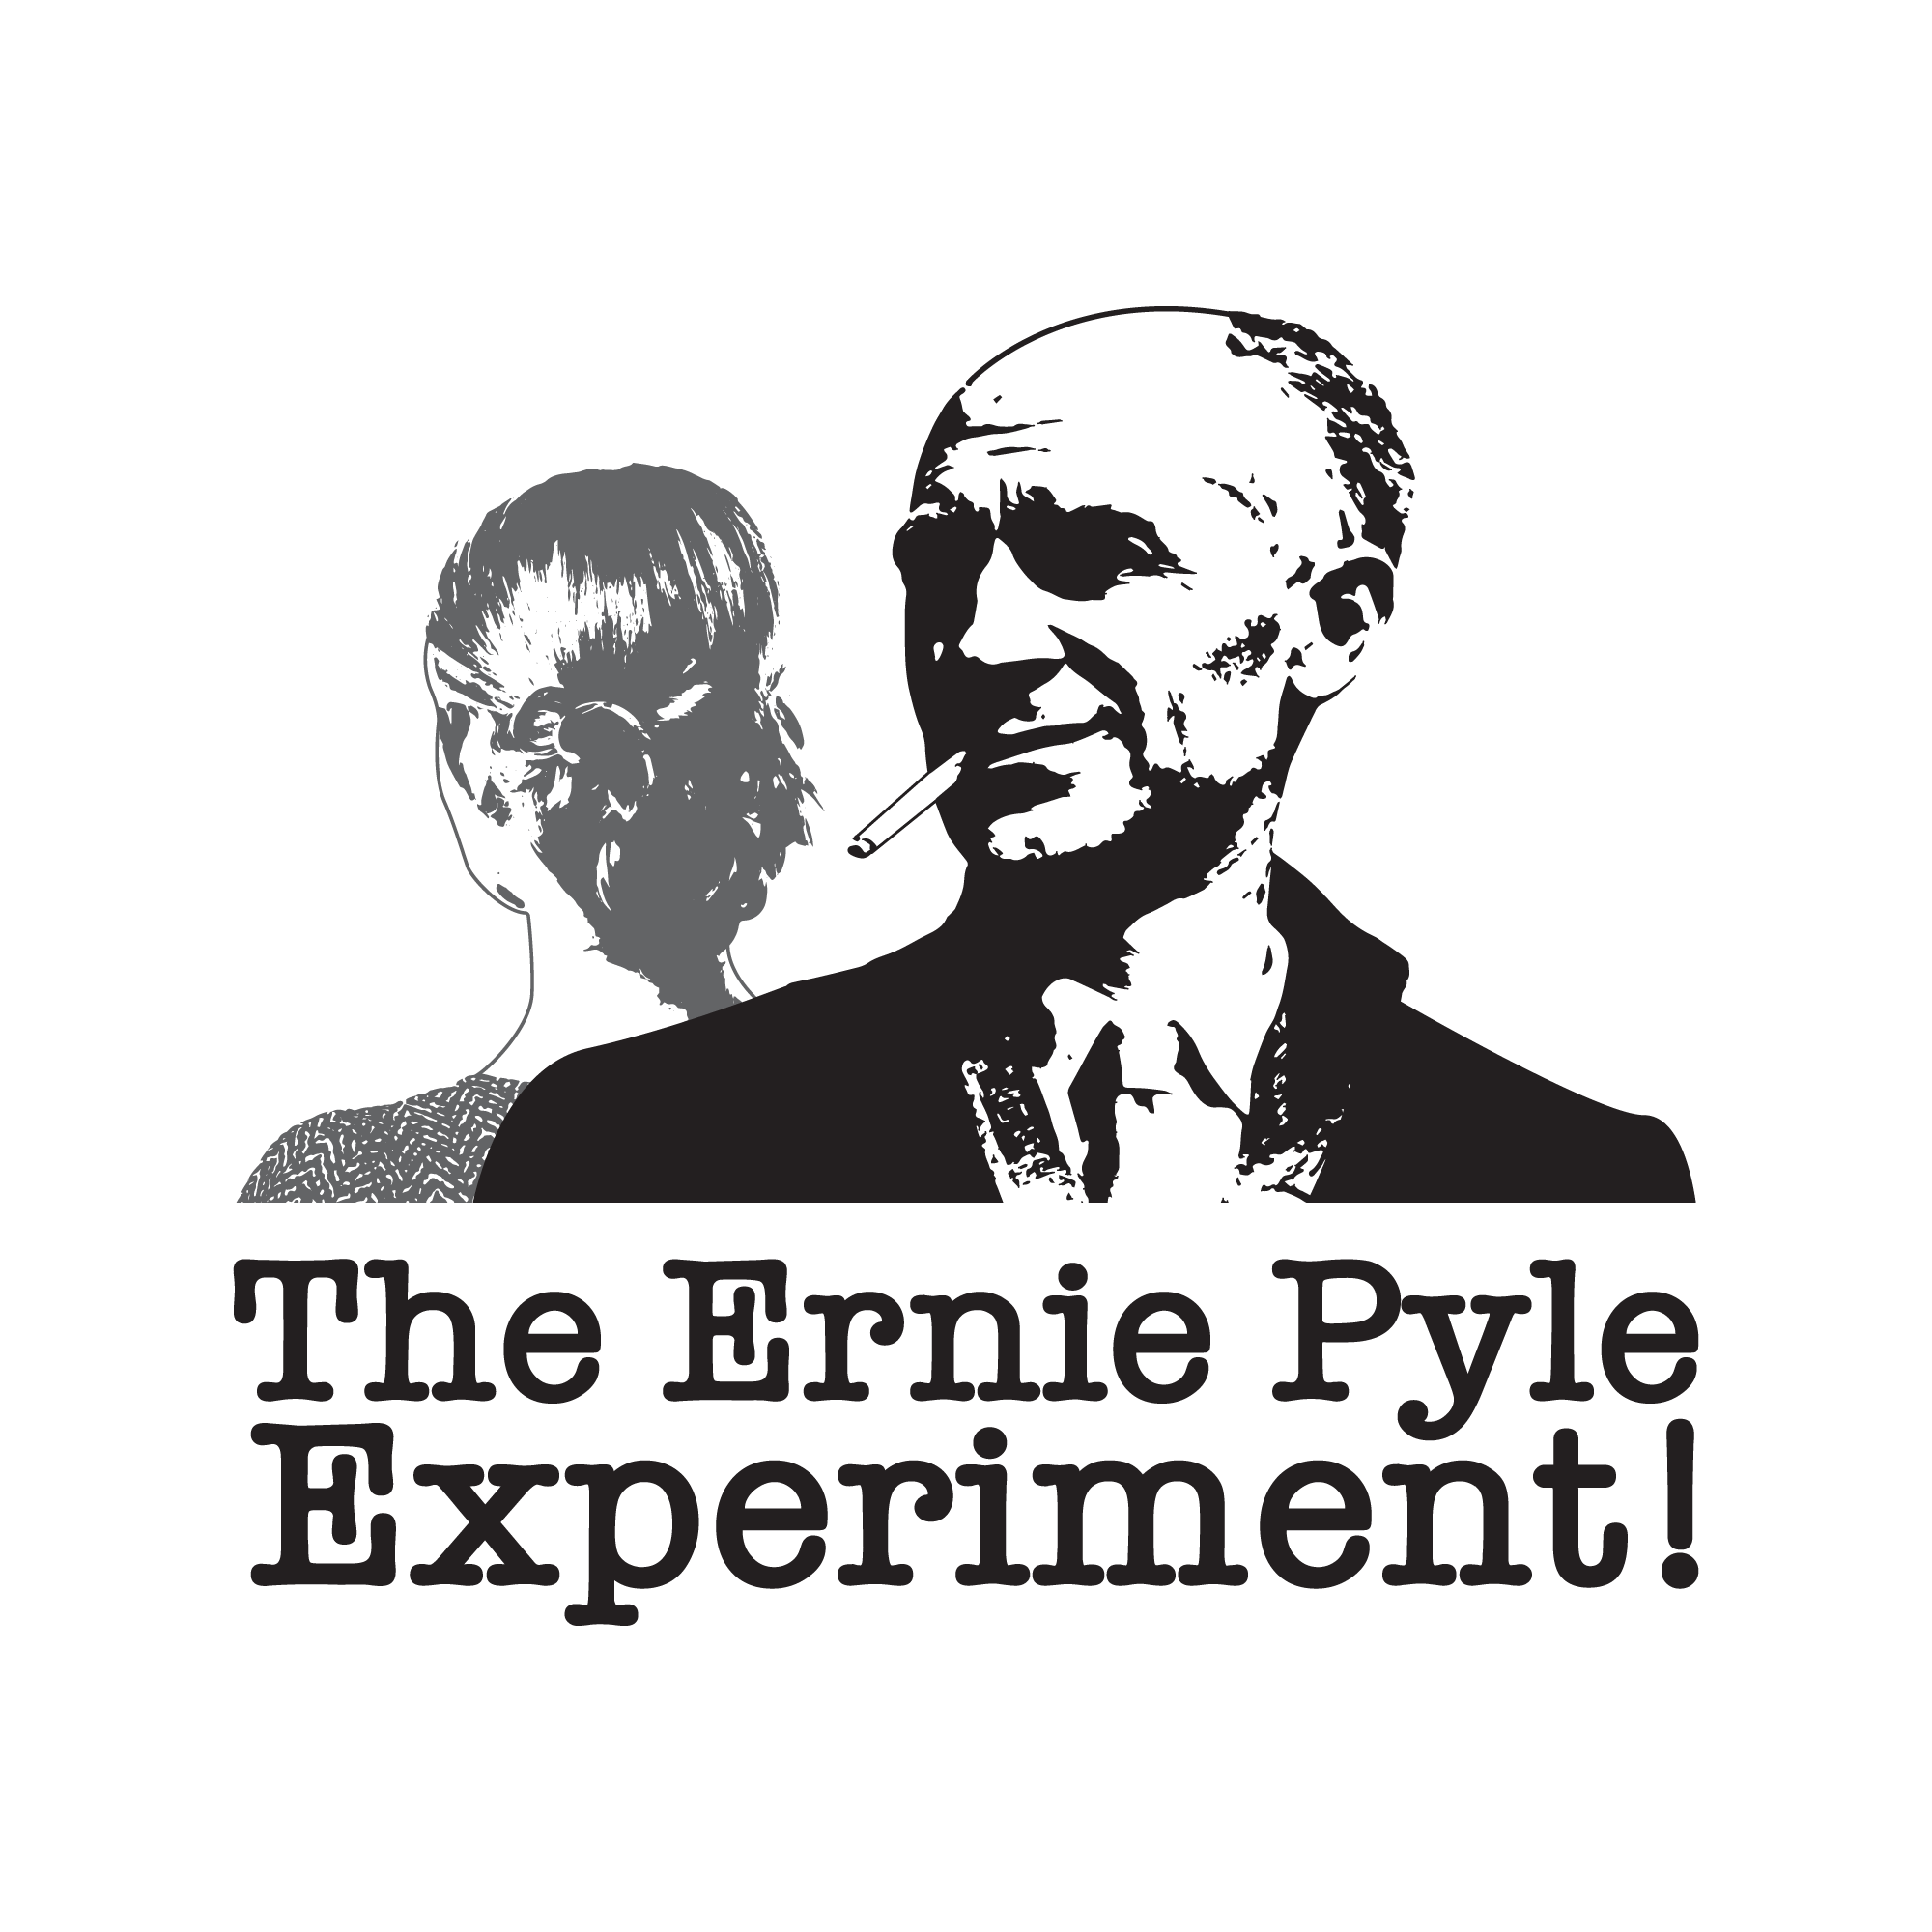 The Ernie Pyle Experiment